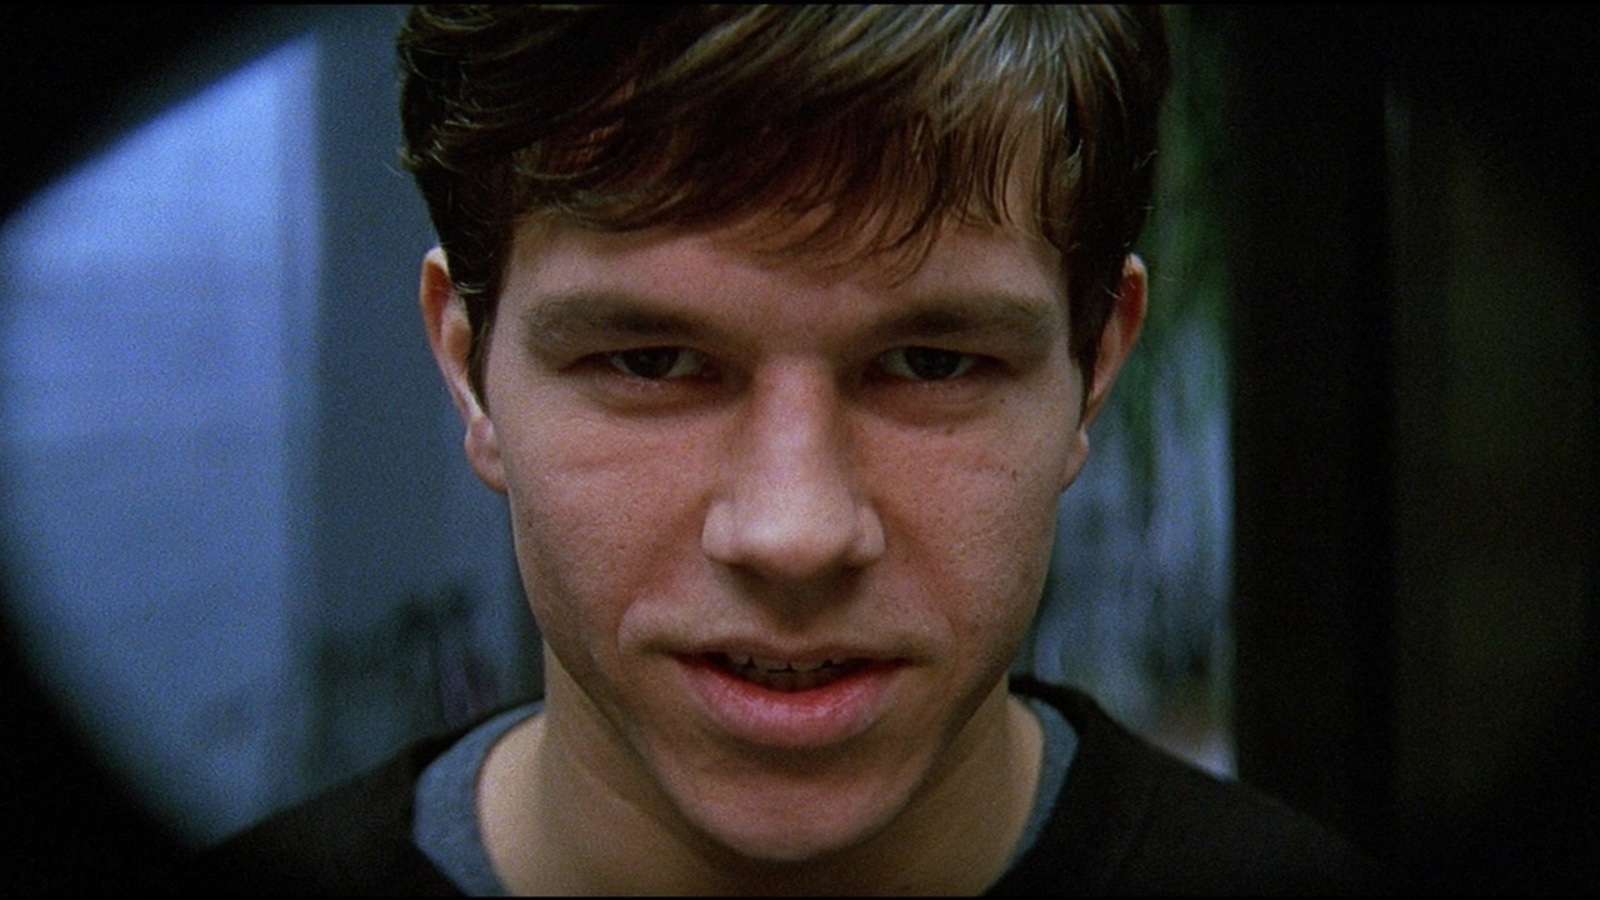 Mark Wahlberg in Fear as David.